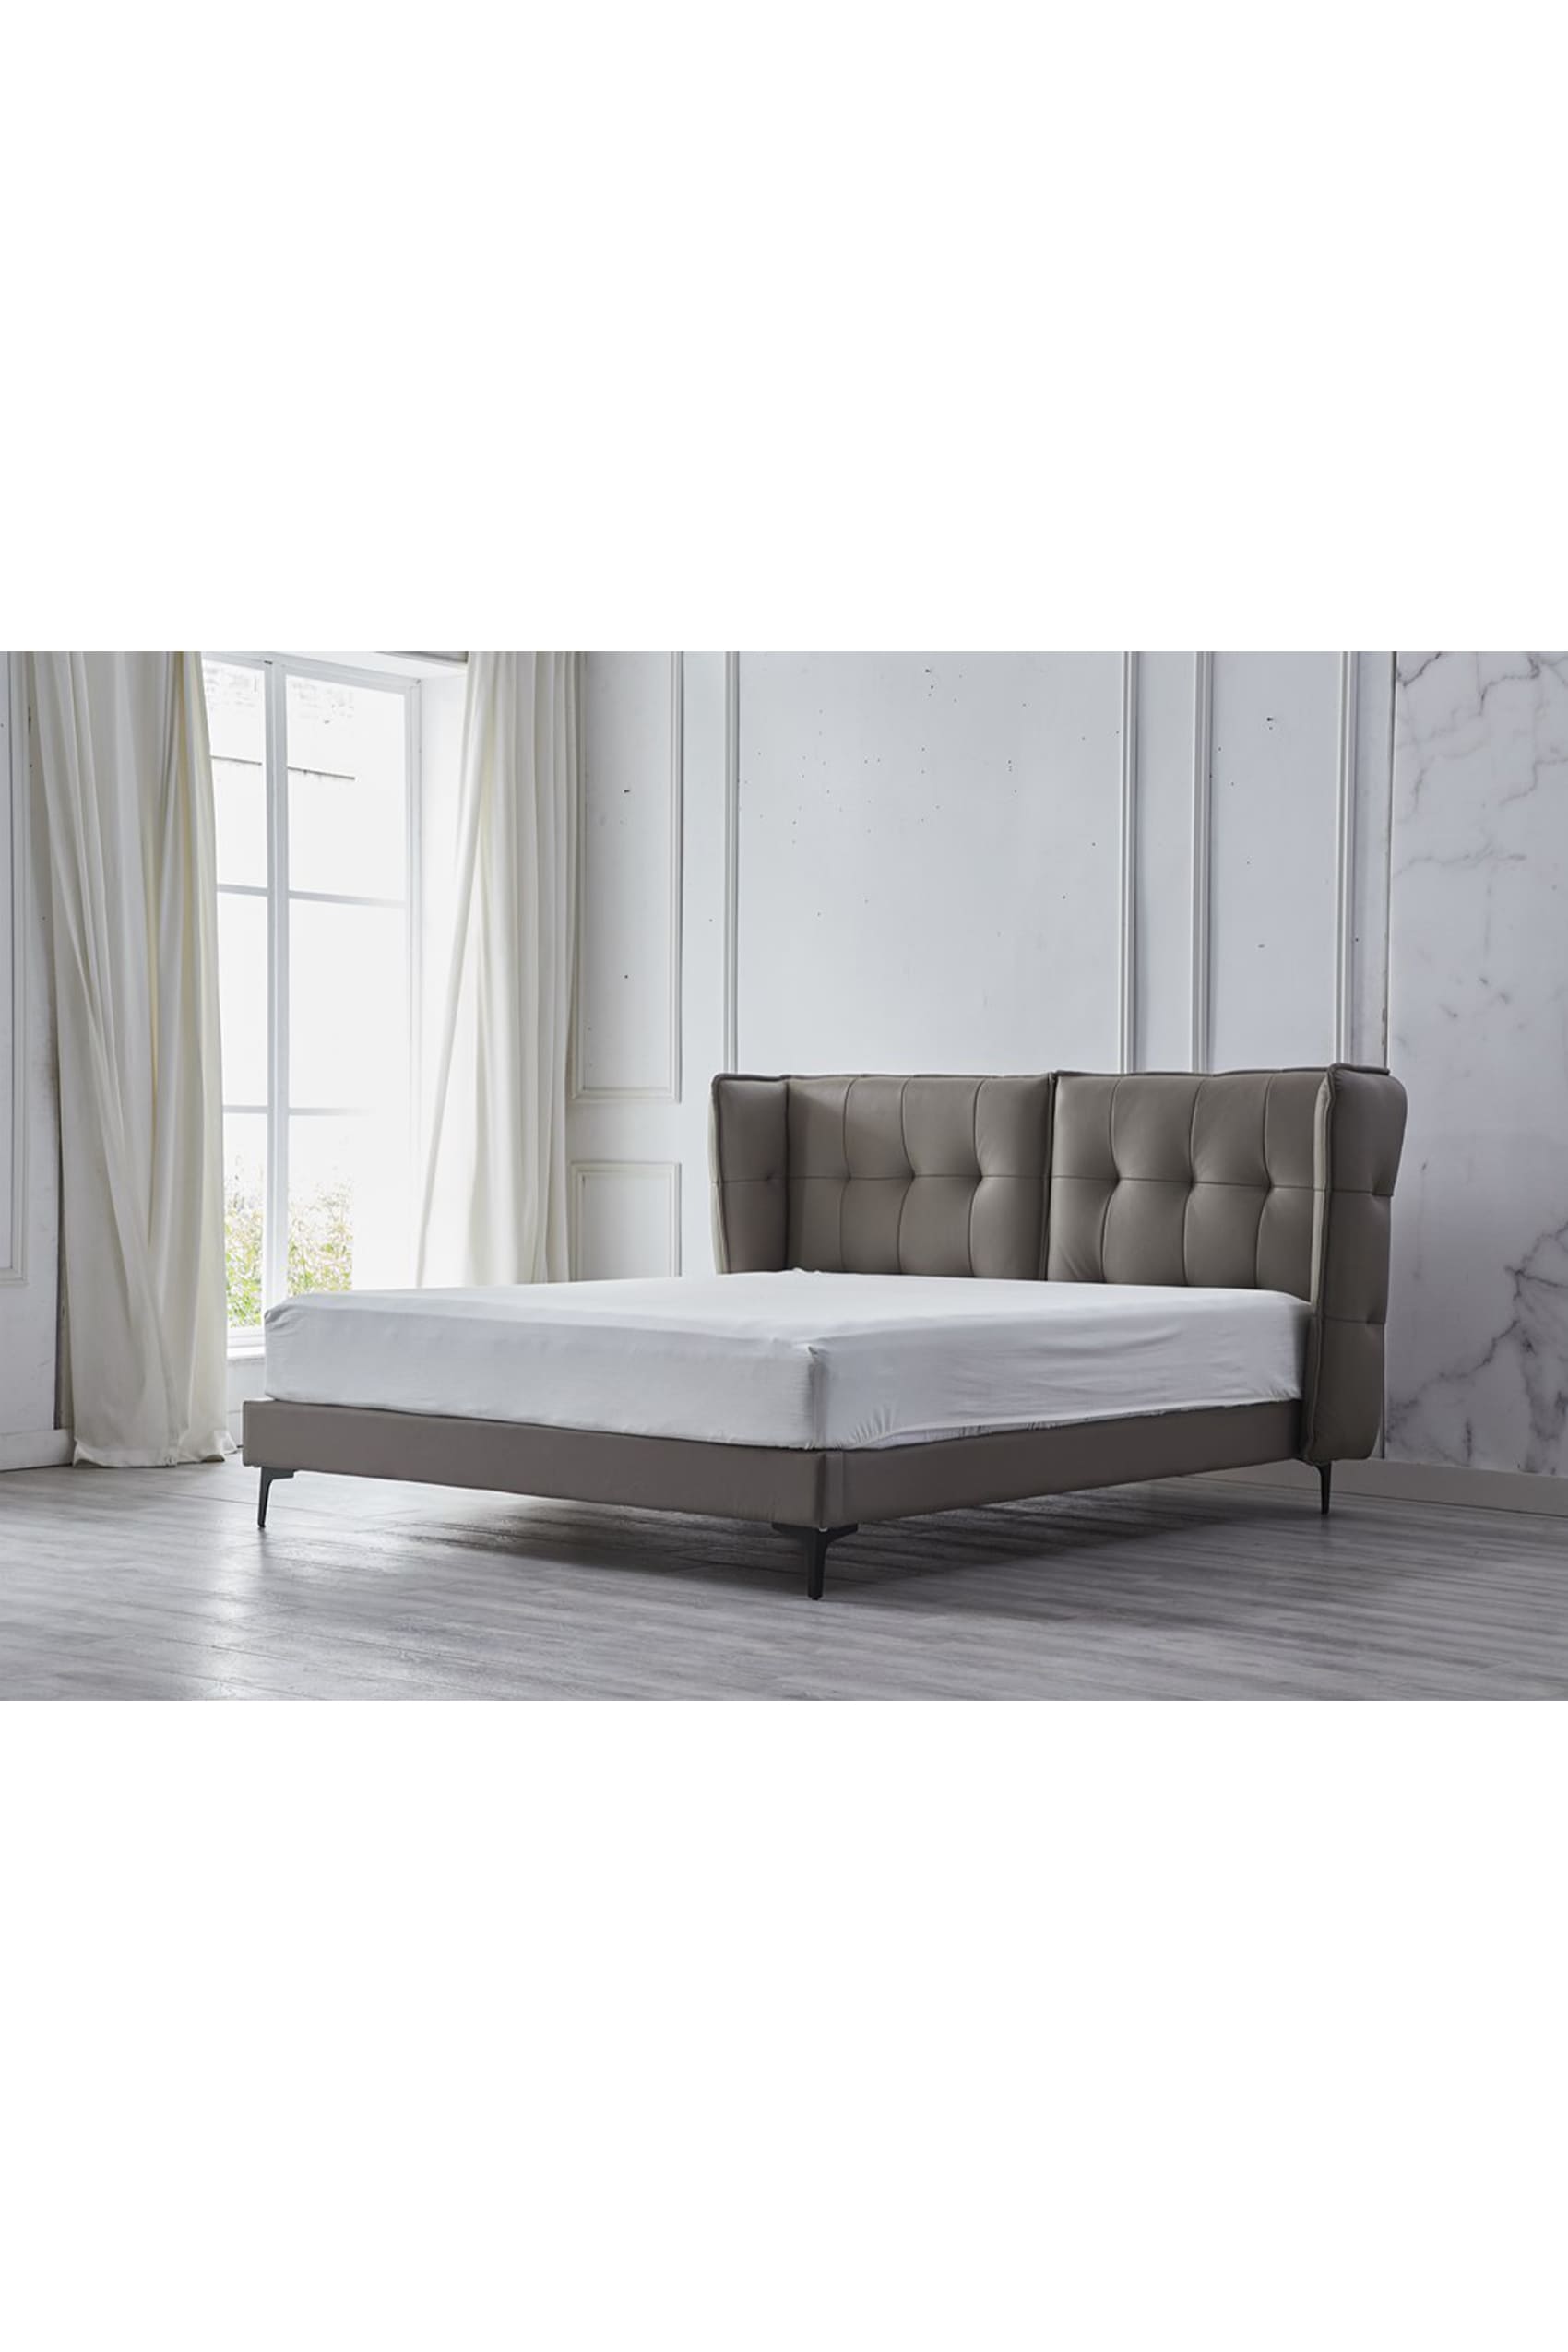 Marzio Designer Bed Frame